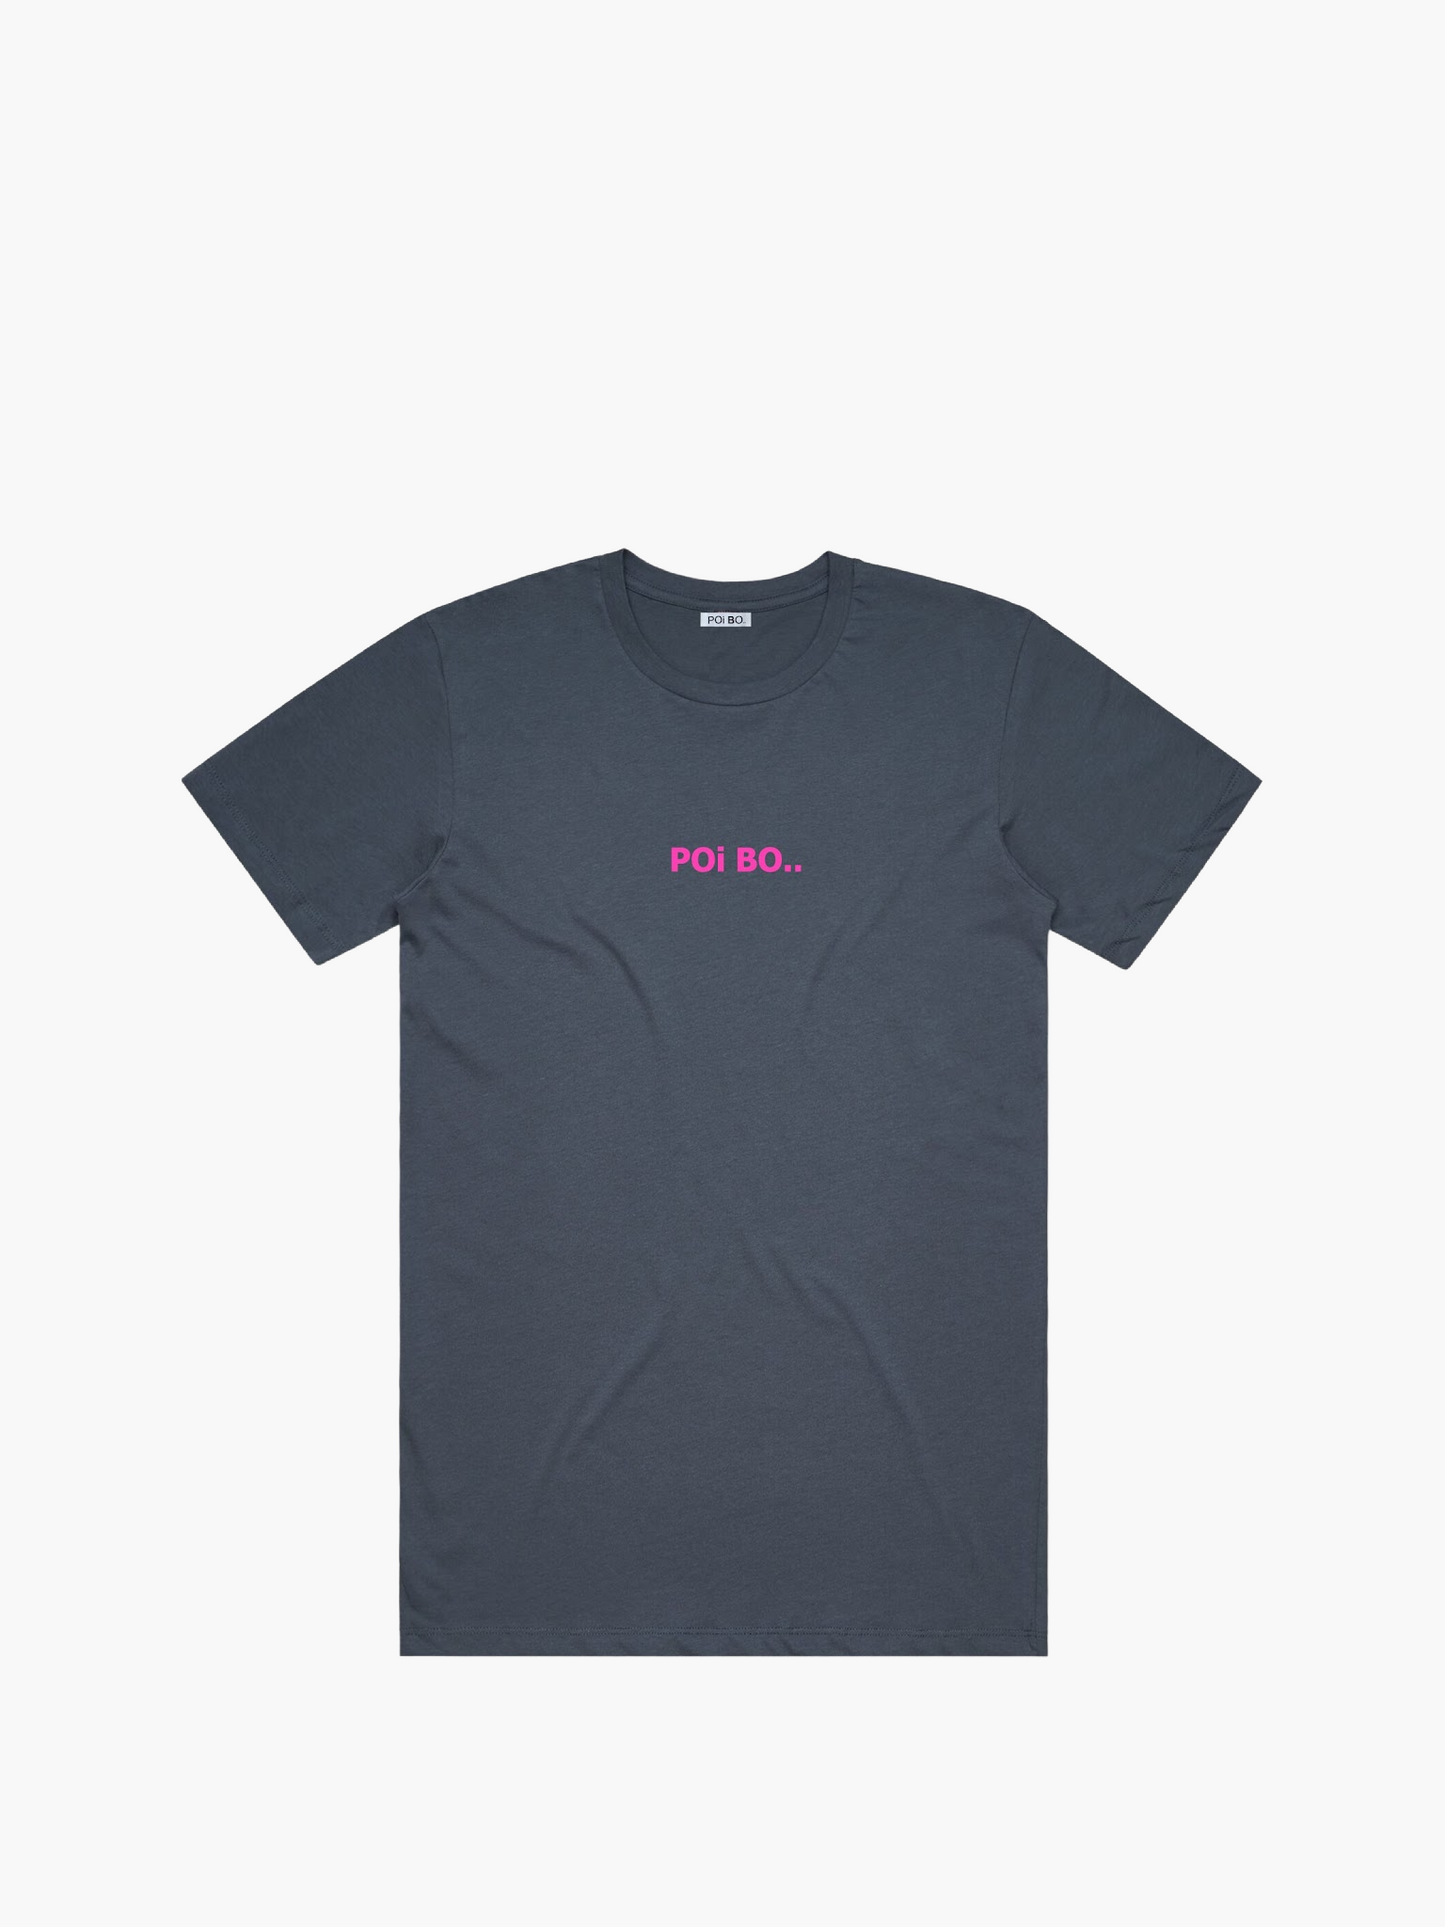 T-shirt "POi BO.."